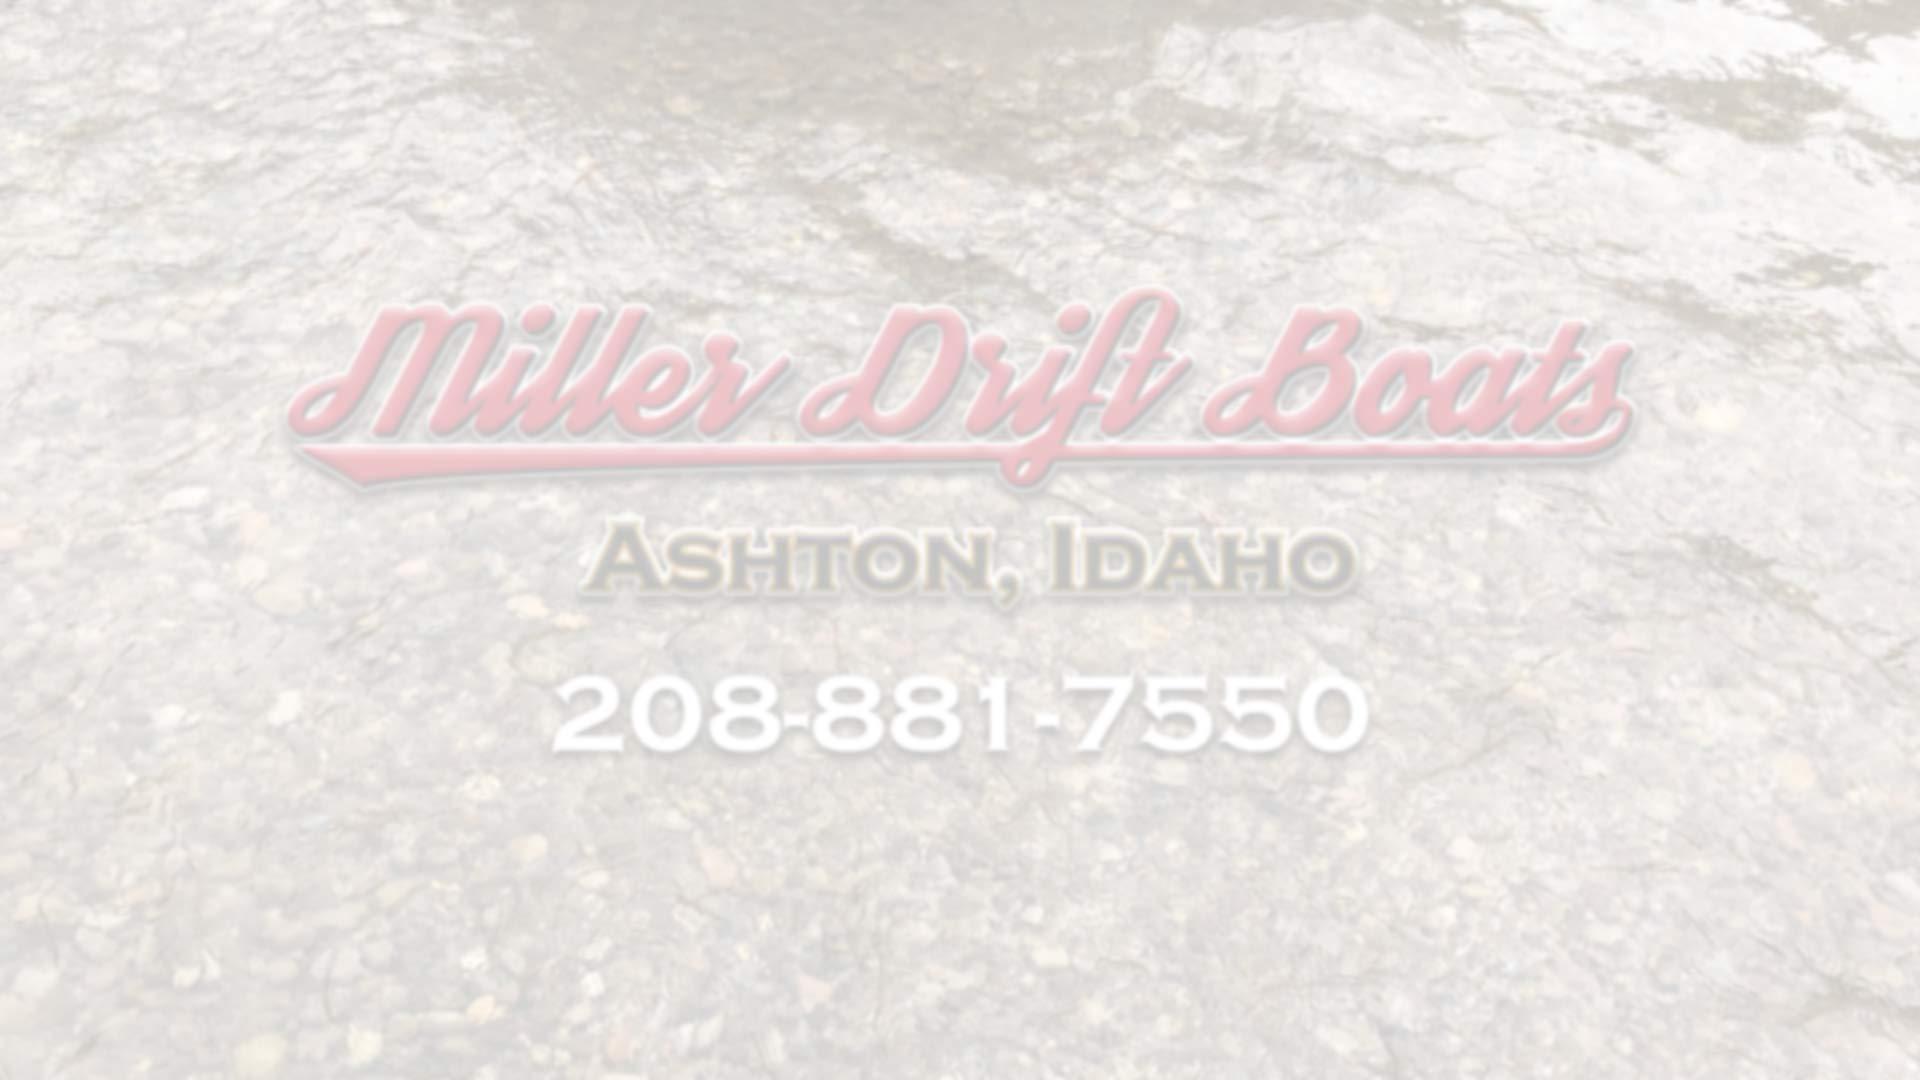 Miller Drift Boat Rentals - Ashton, Idaho